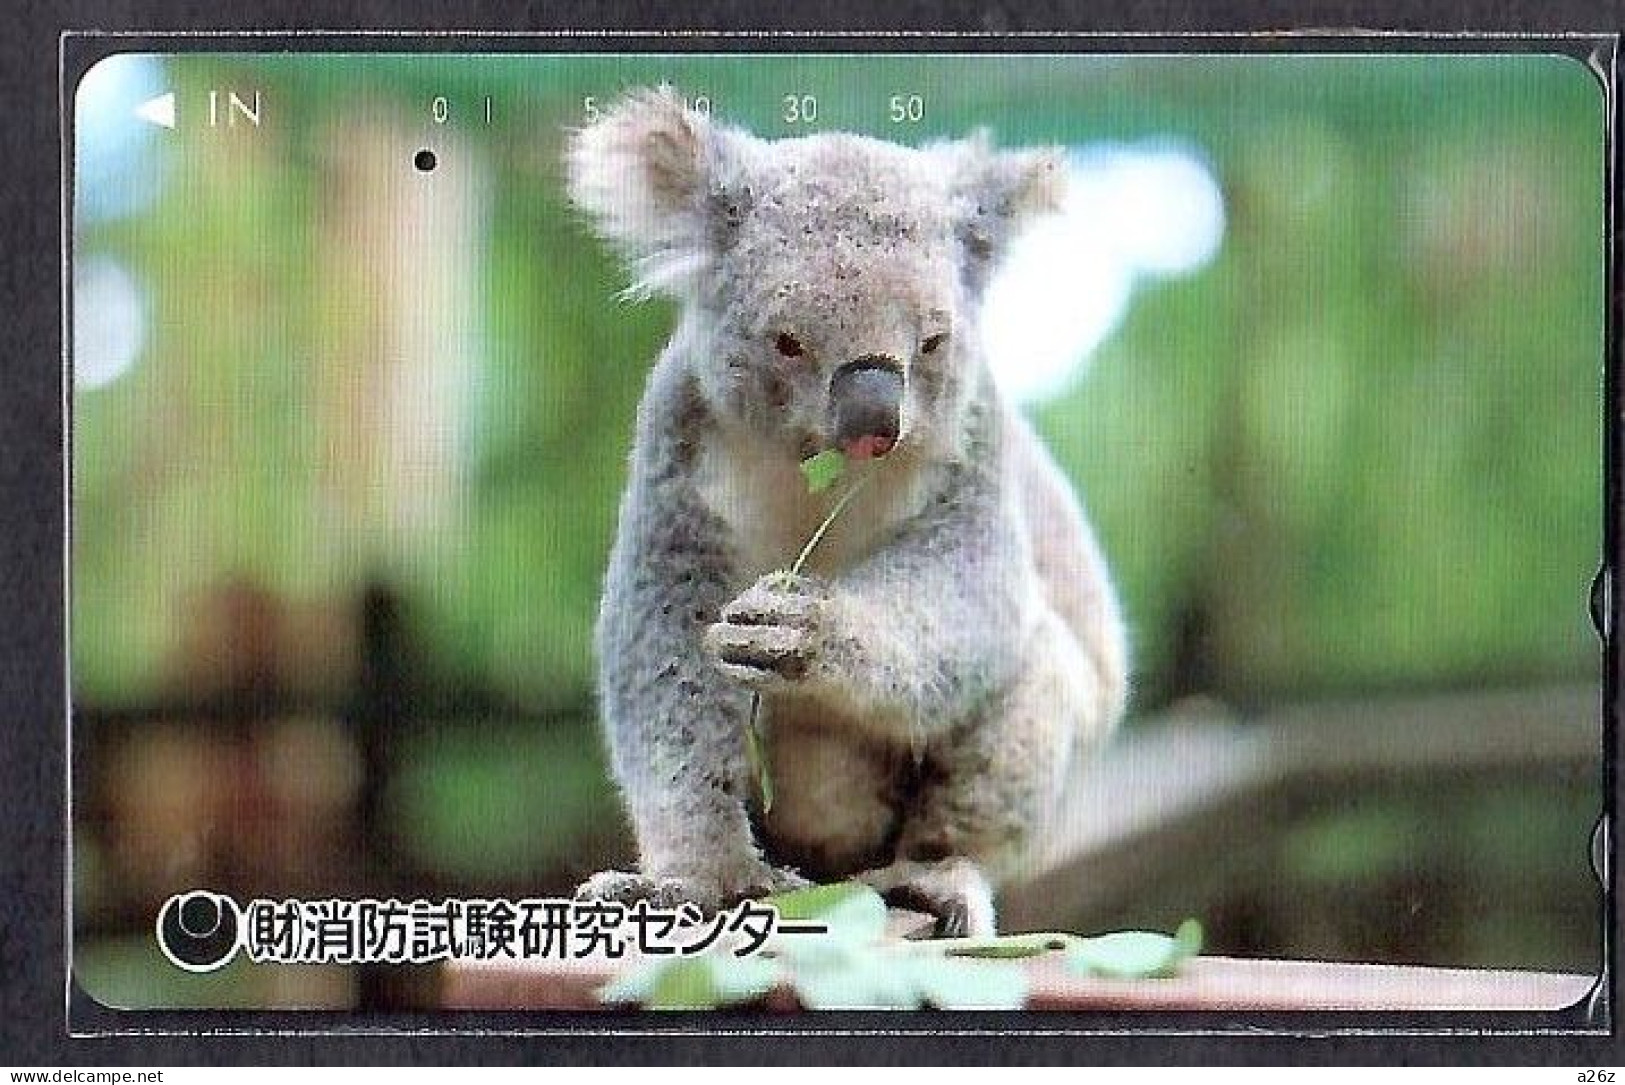 Japan 1V Koala Advertising Used Card - Oerwoud